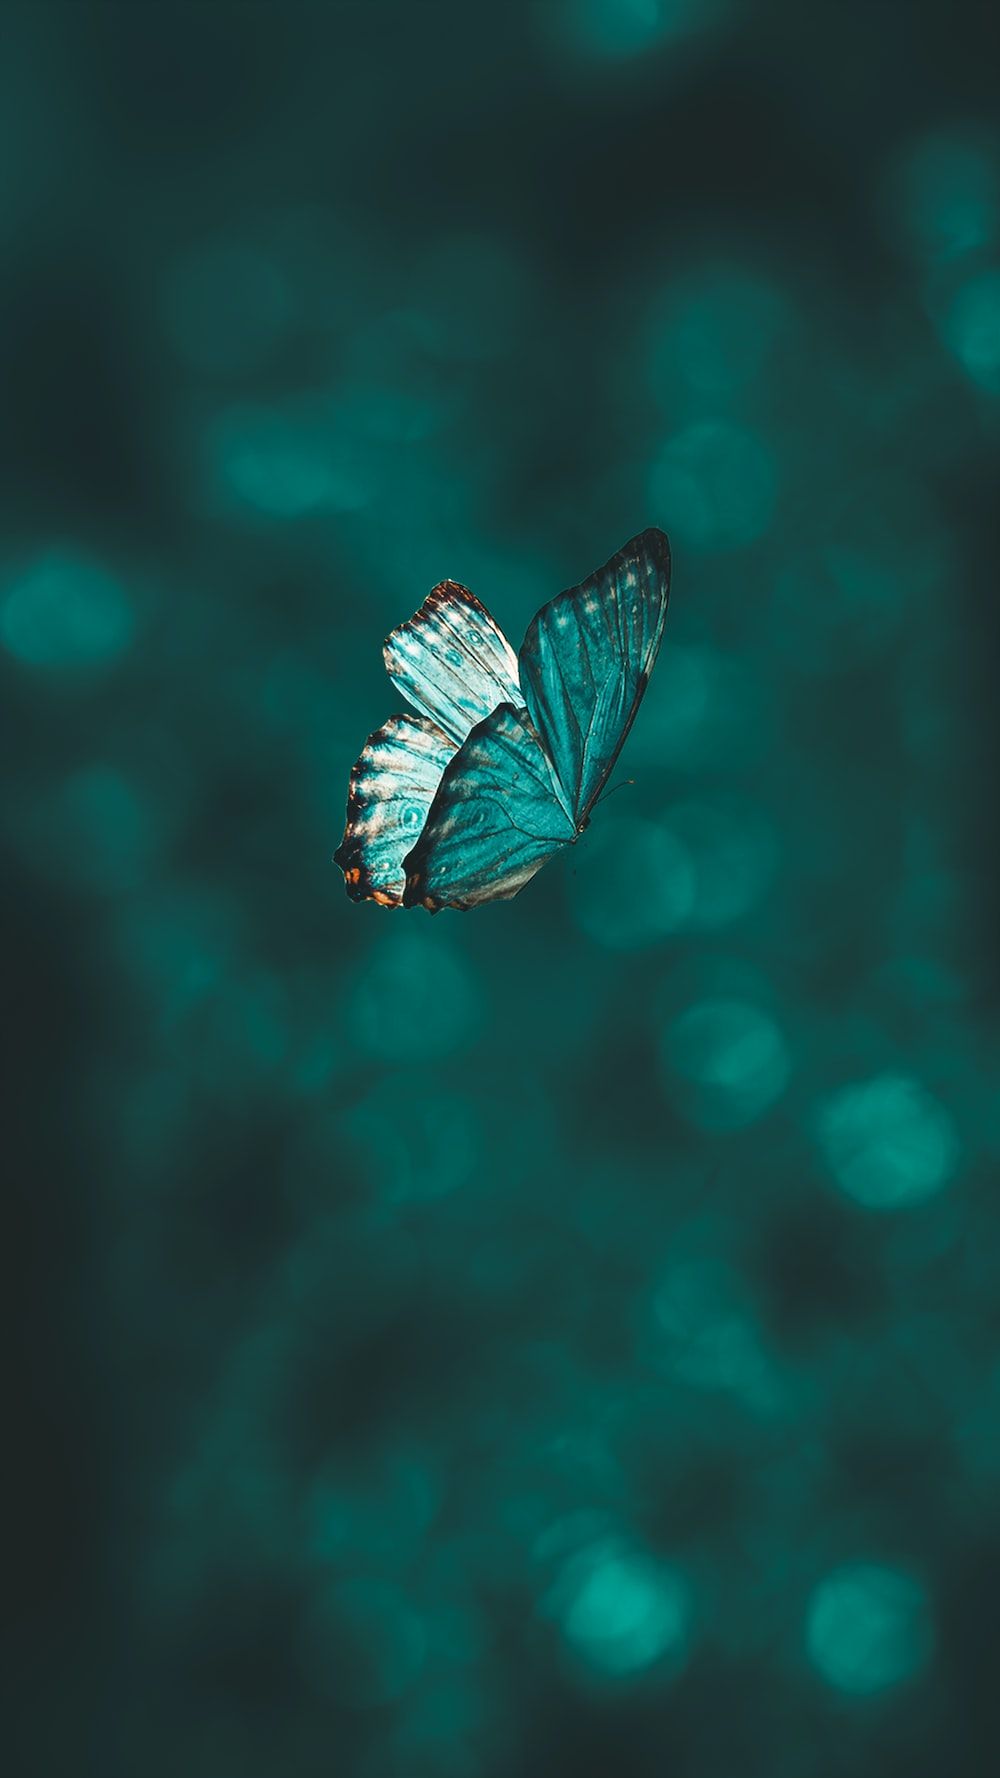 A blue butterfly on a blue background - Butterfly